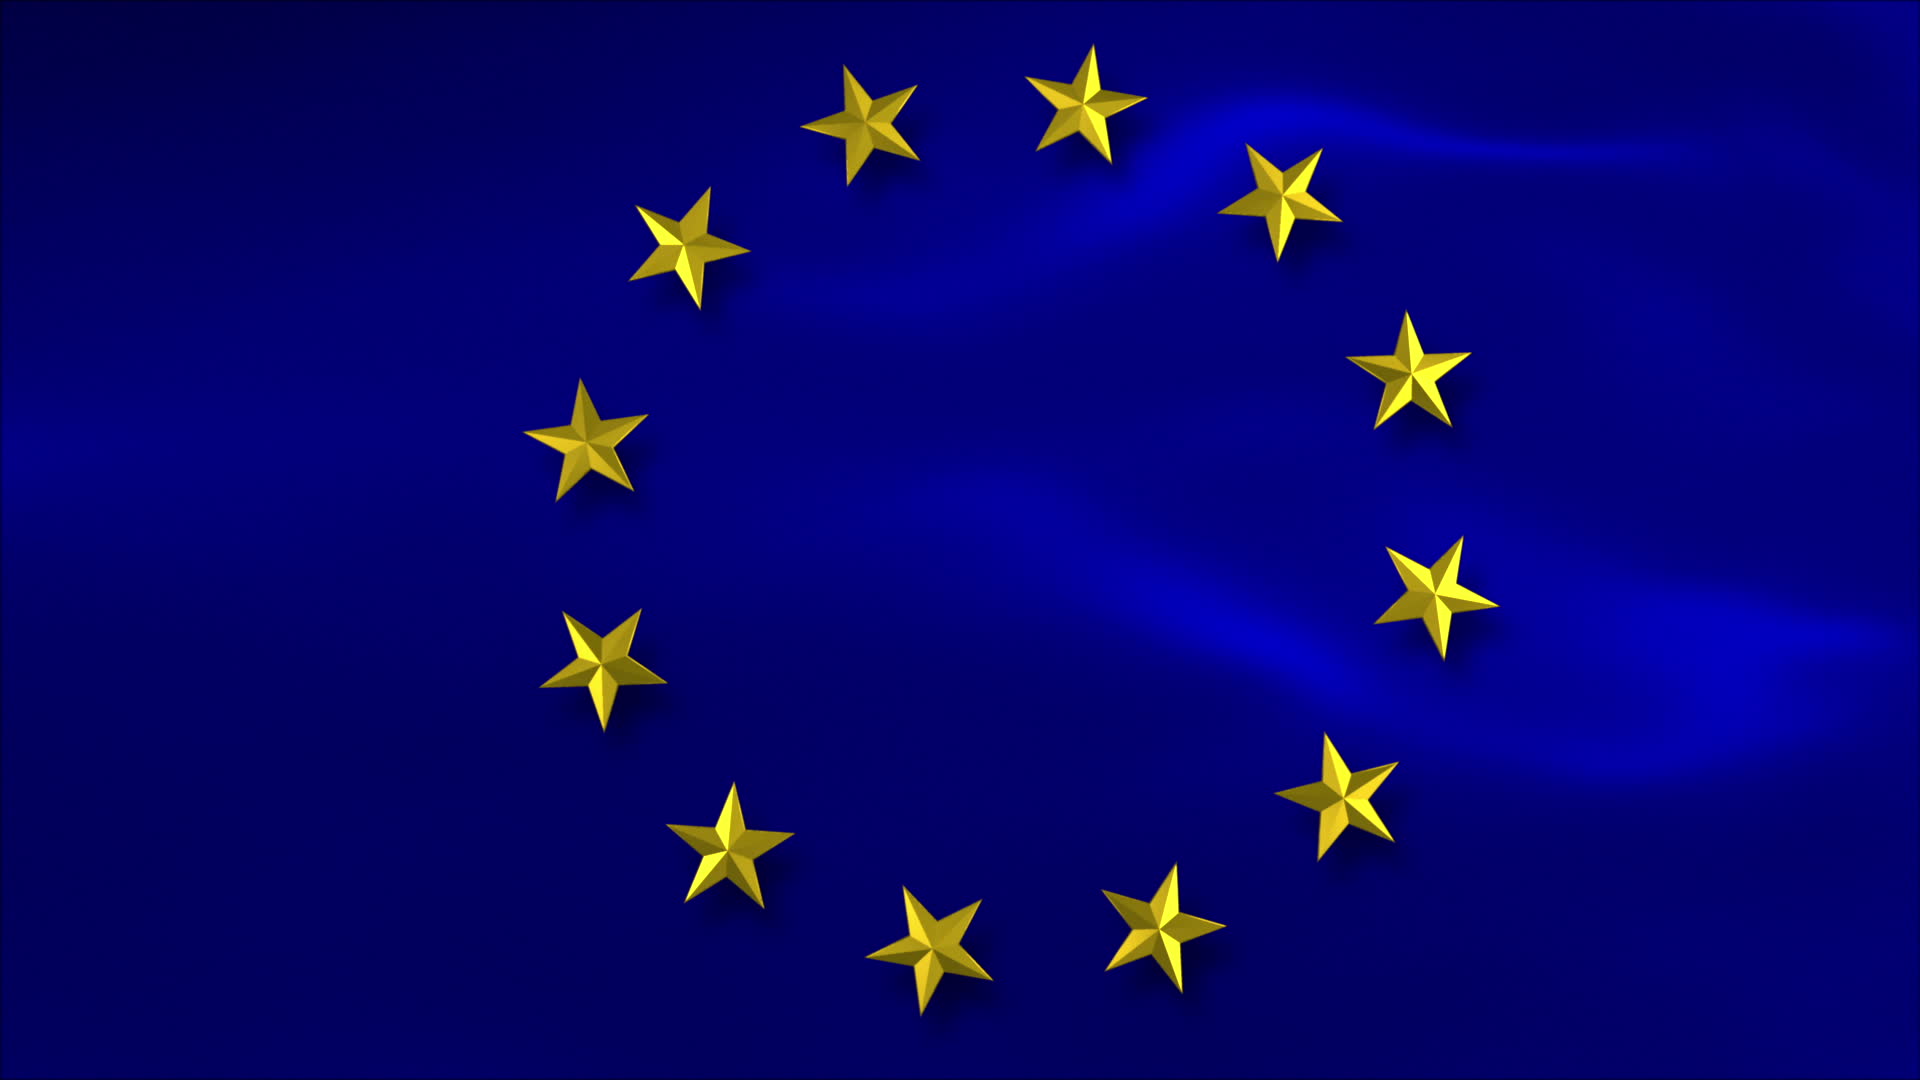 File:Eu-Flag.jpg - Wikimedia Commons